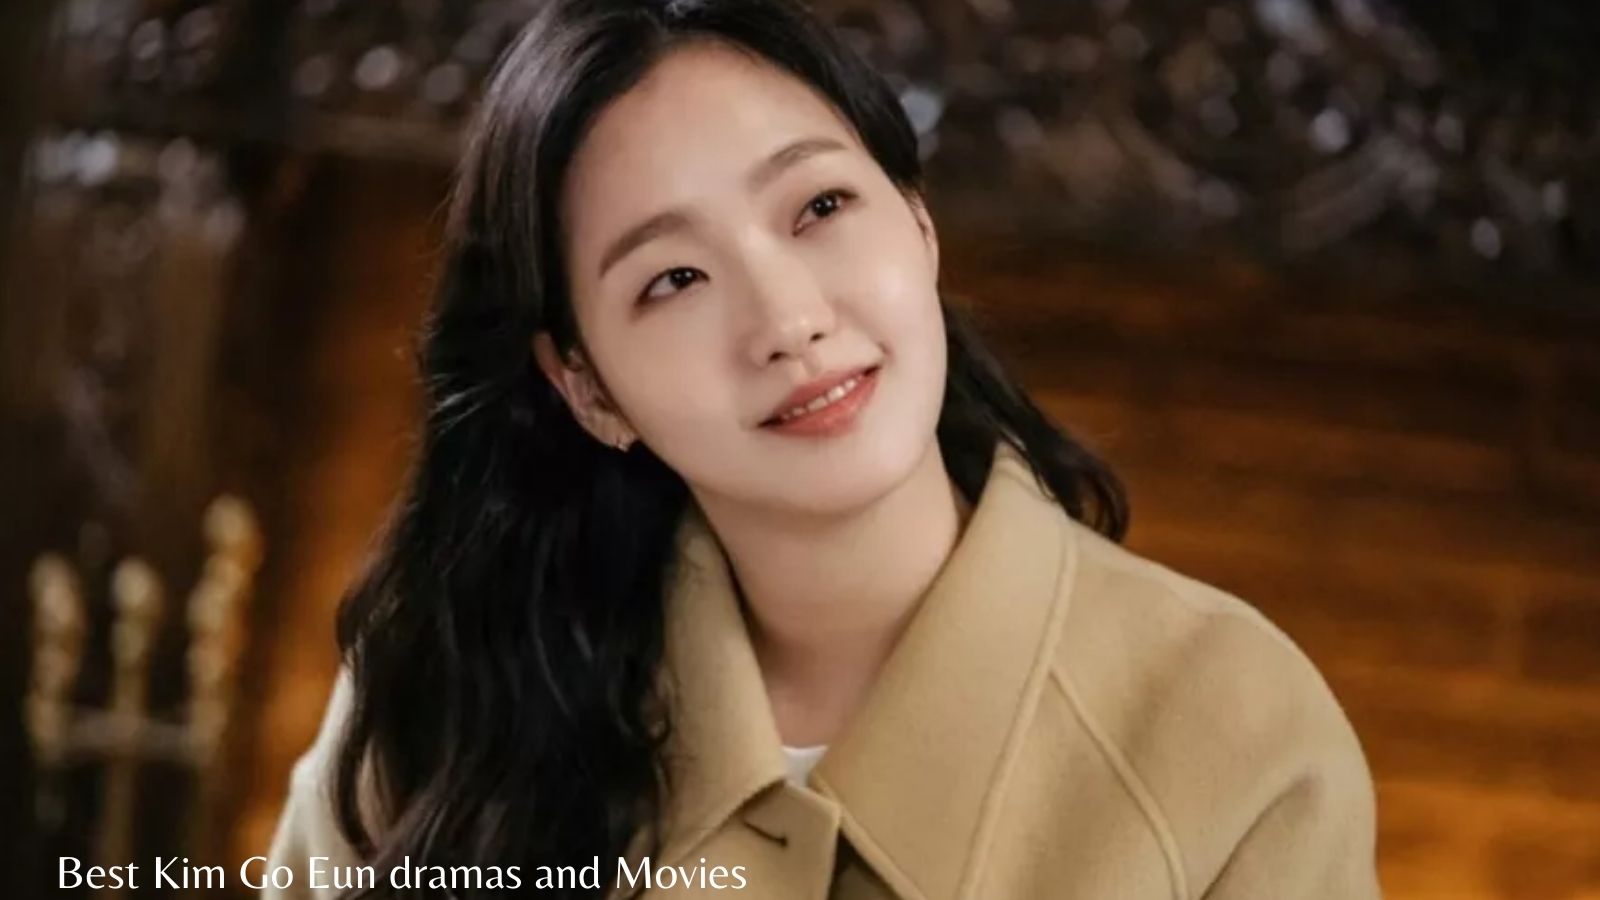 Best Kim Go Eun dramas and movies